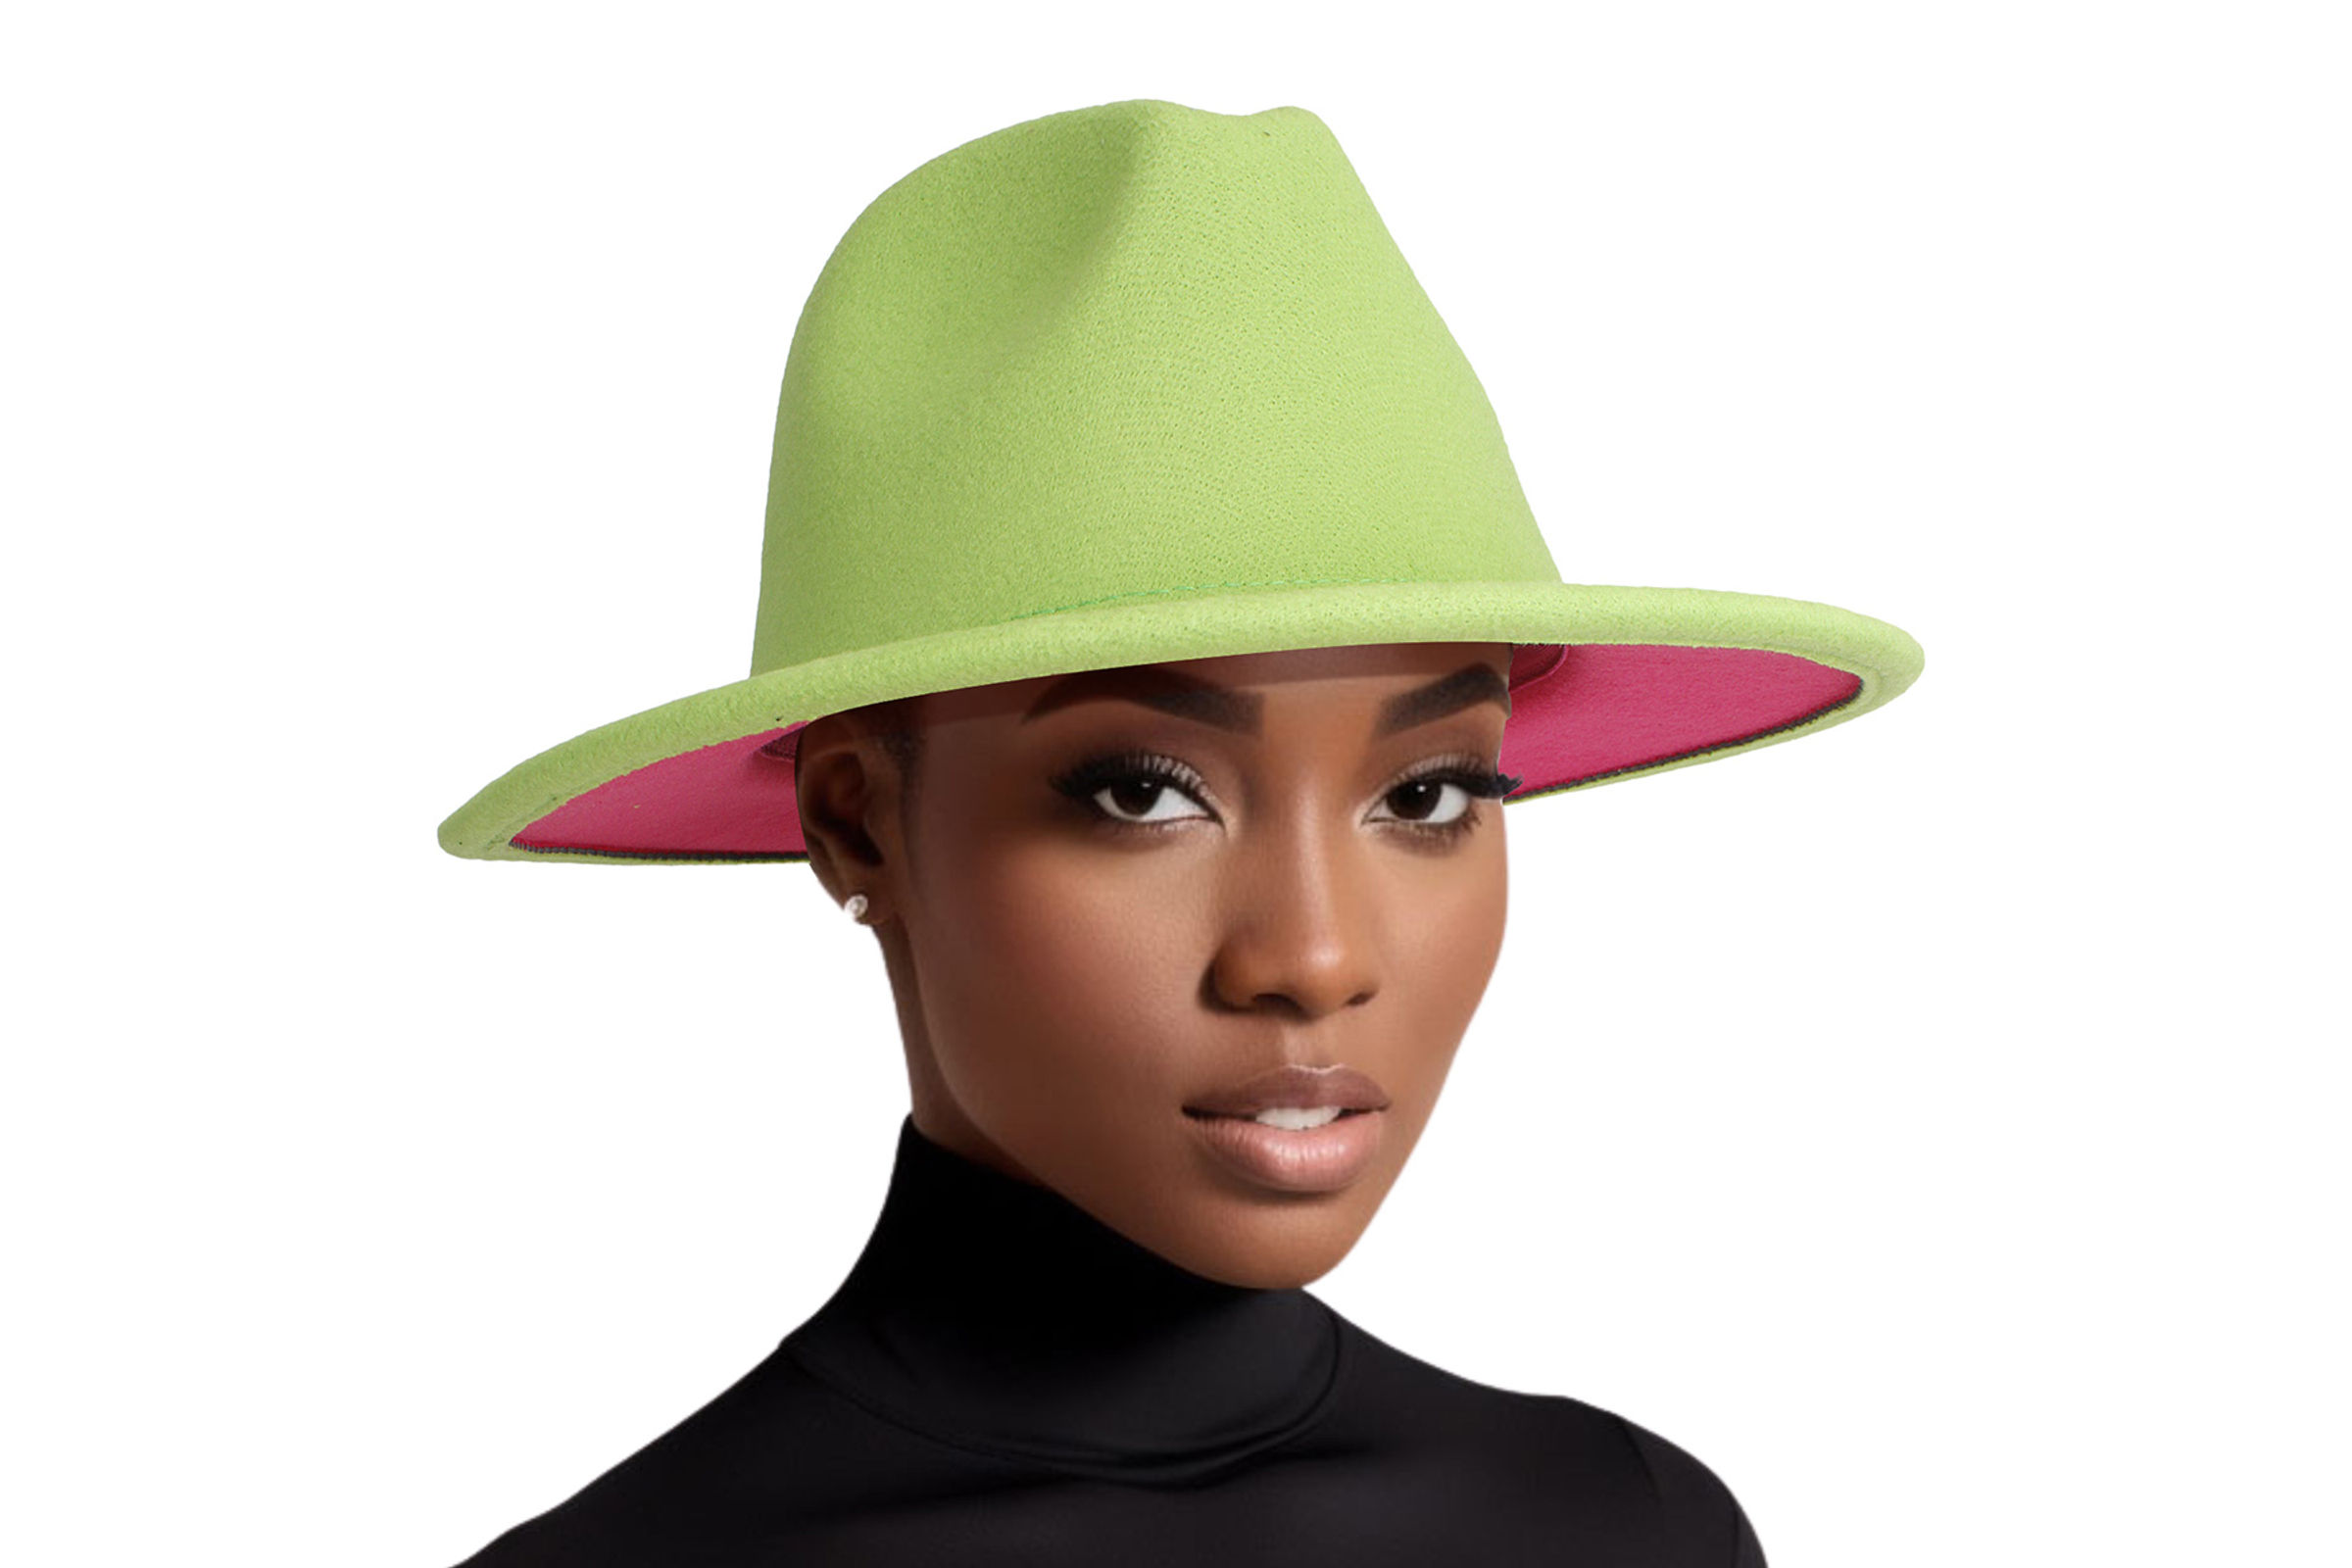 https://cdnimg.pinktownusa.com/tr:h-,w-,cm-pad_resize/media/catalog/product/image/1073453aa/fedora-green-pink-two-tone-wide-brim-hat-for-women.jpg?ik-sdk-version=php-1.2.2